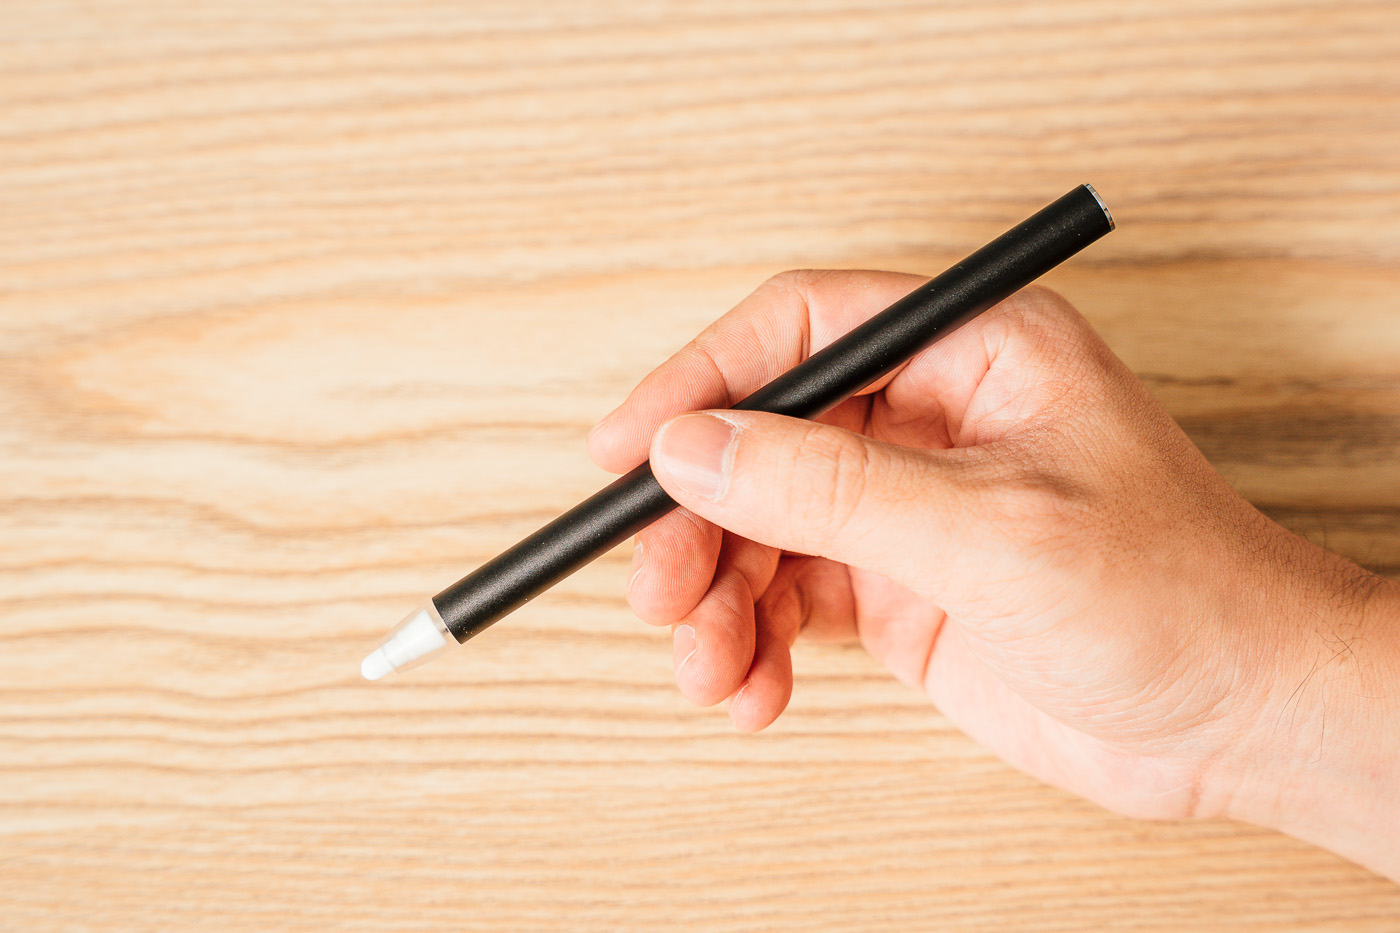 TU1 十分獨特的功能之一就是觸控，利用專屬紅外線感測的觸控筆，便可以在投影畫面上進行繪製與註記，且因為觸控筆本體的尺寸設計合宜，因此拿在手中就像一般握持正常的筆，使用相當就手。